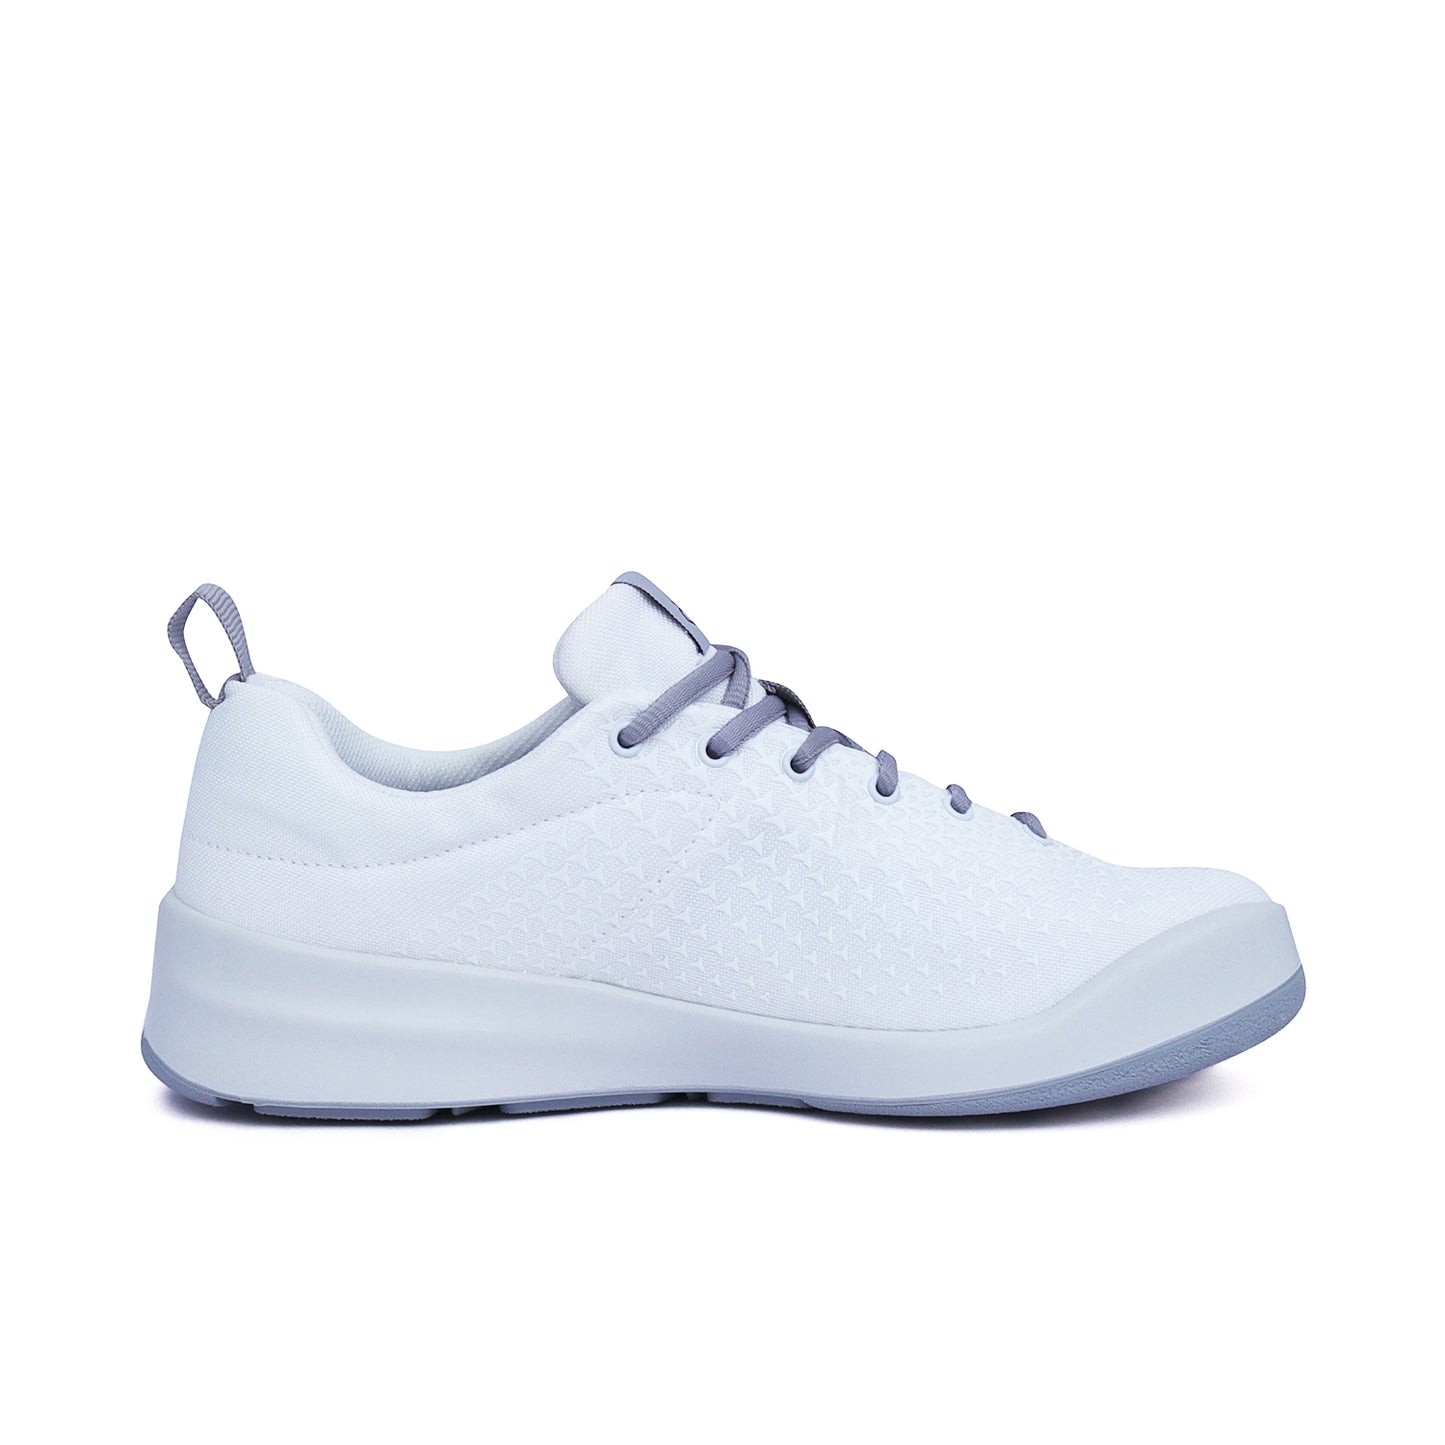 Women's Versatile Sneakers - White / Grey